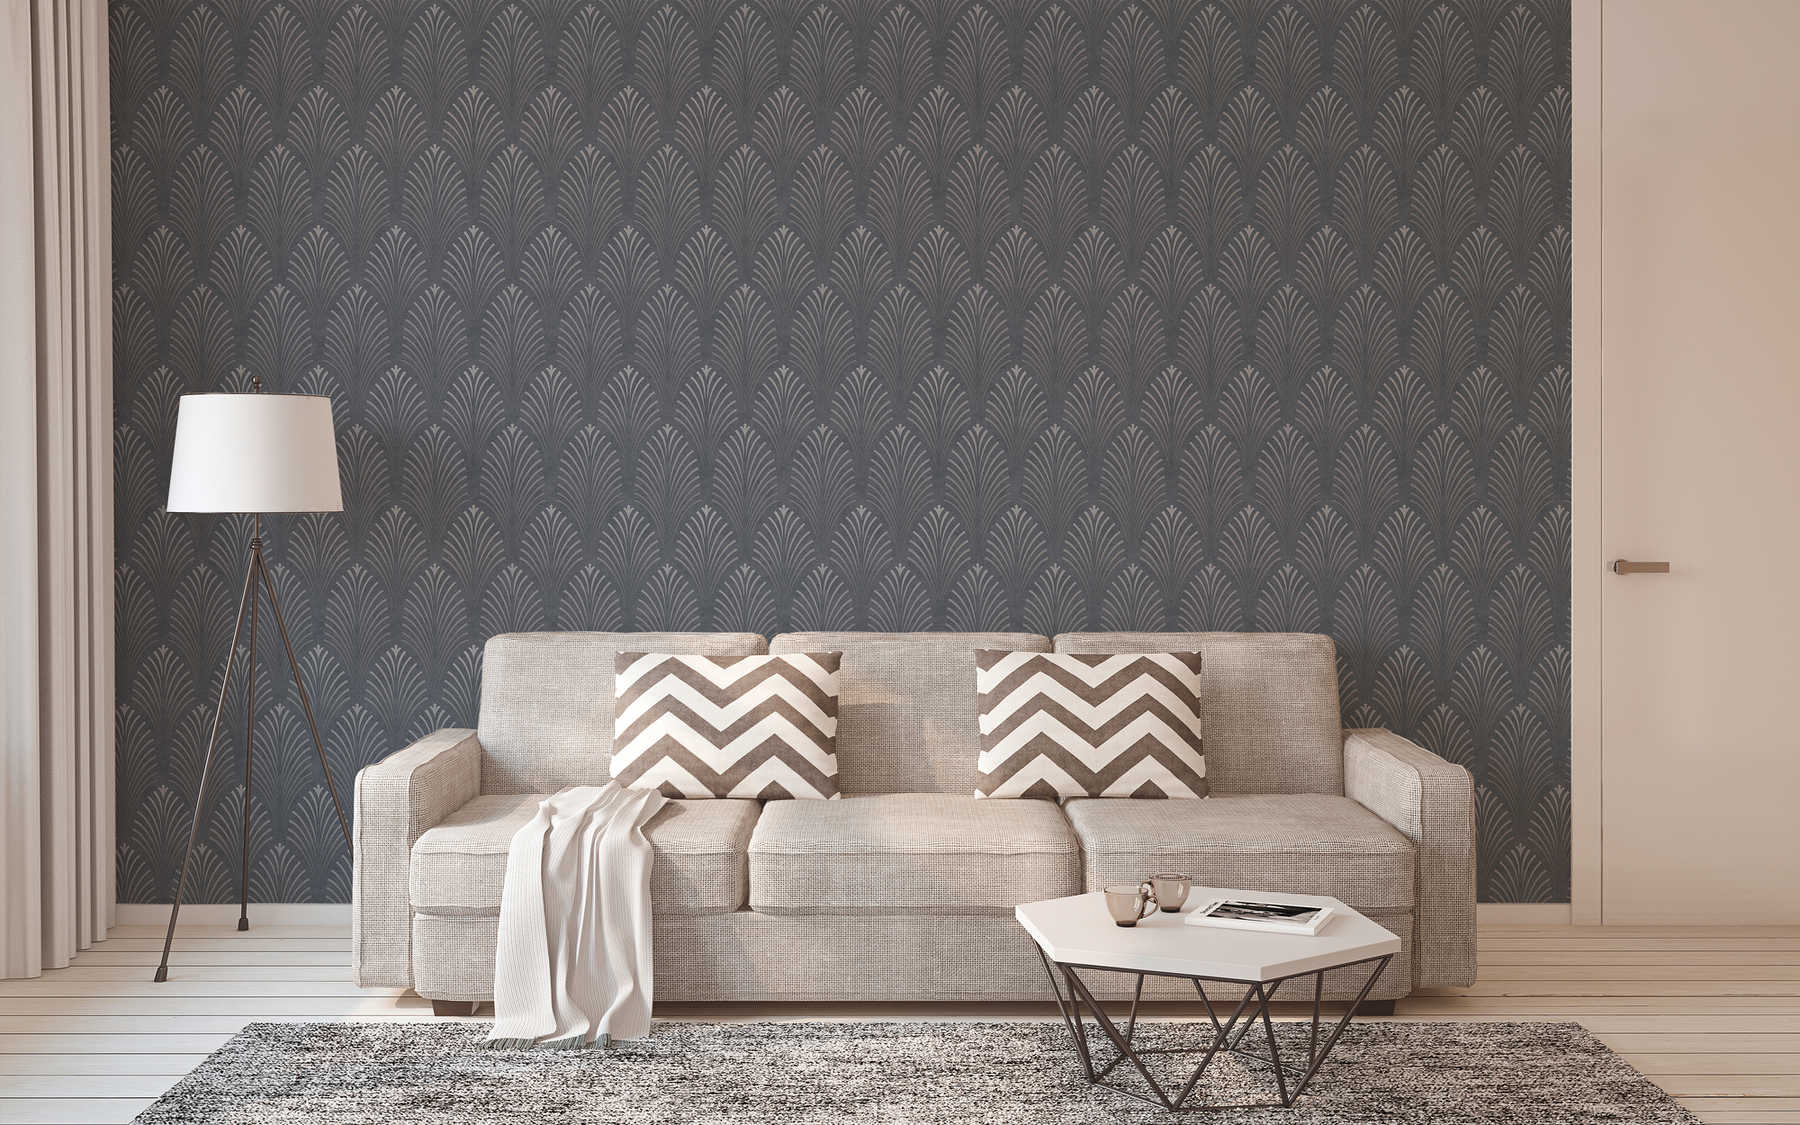             Retro wallpaper art deco style with geometric pattern - black, silver, grey
        